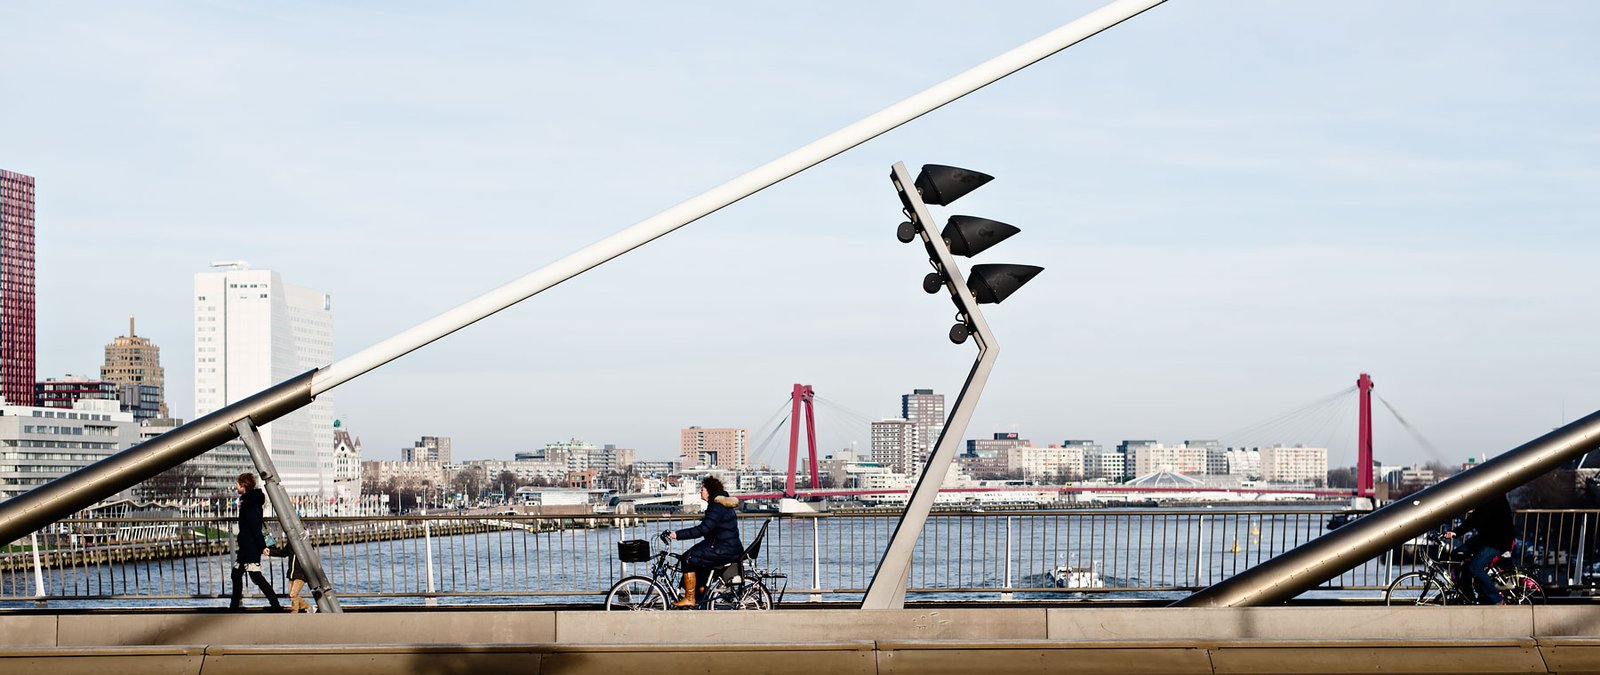 Things to do and see in Rotterdam: Erasmusbrug / Erasmus Bridge